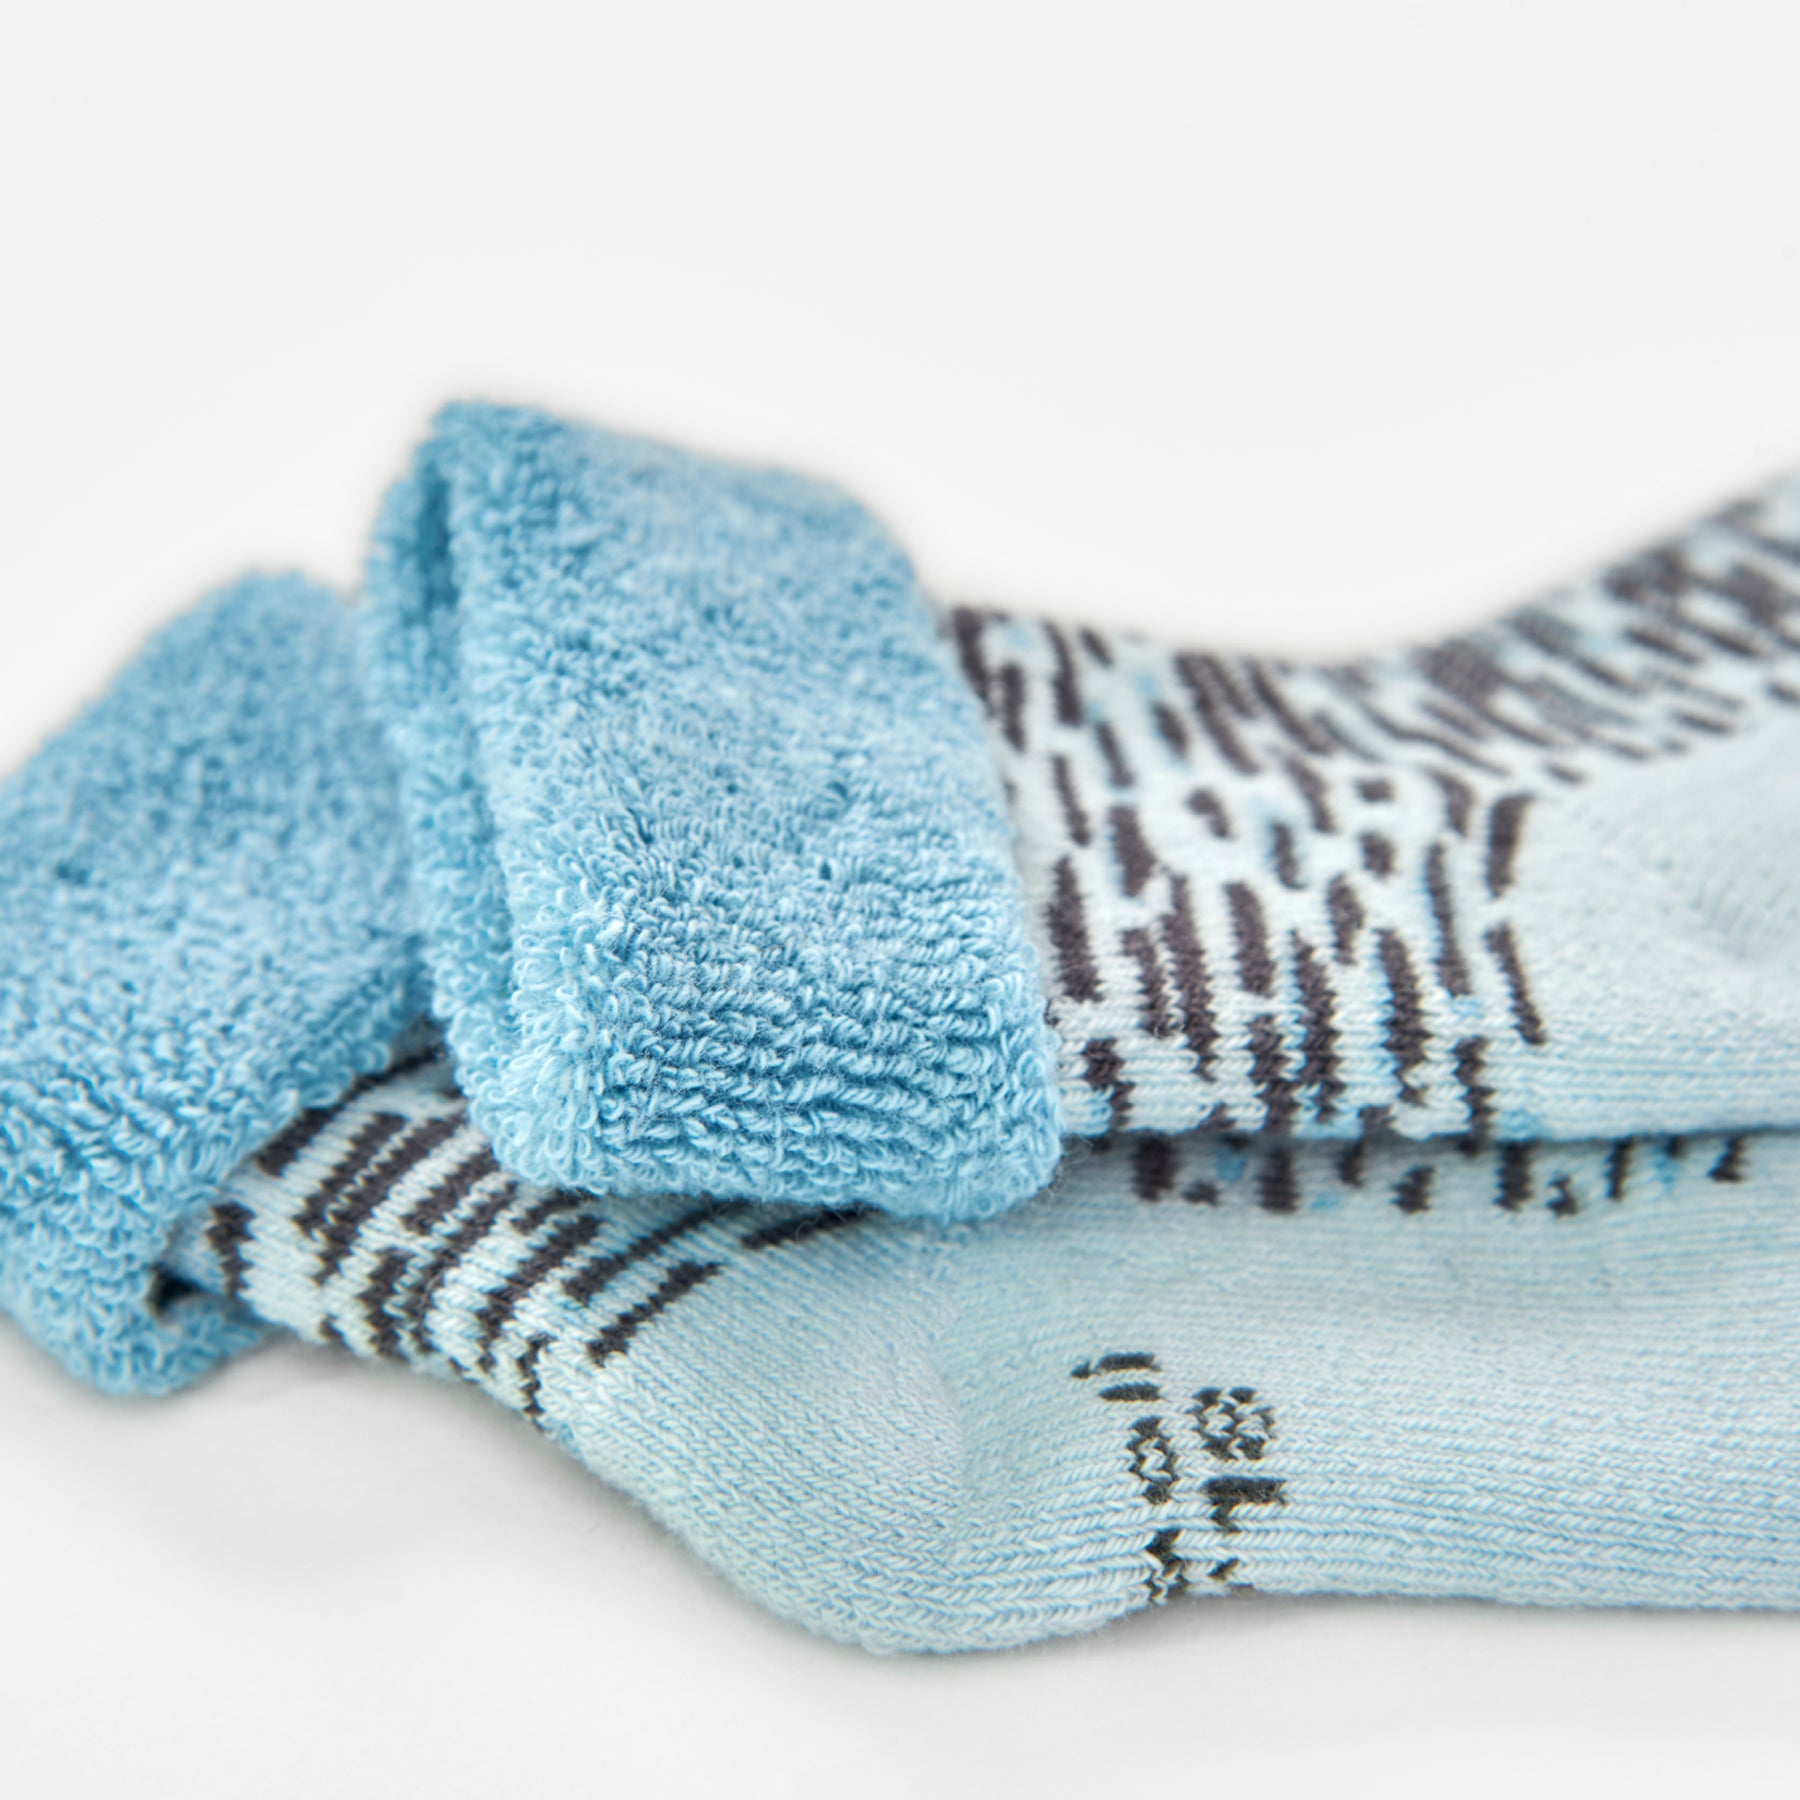 Boboli Blue Tiger Socks